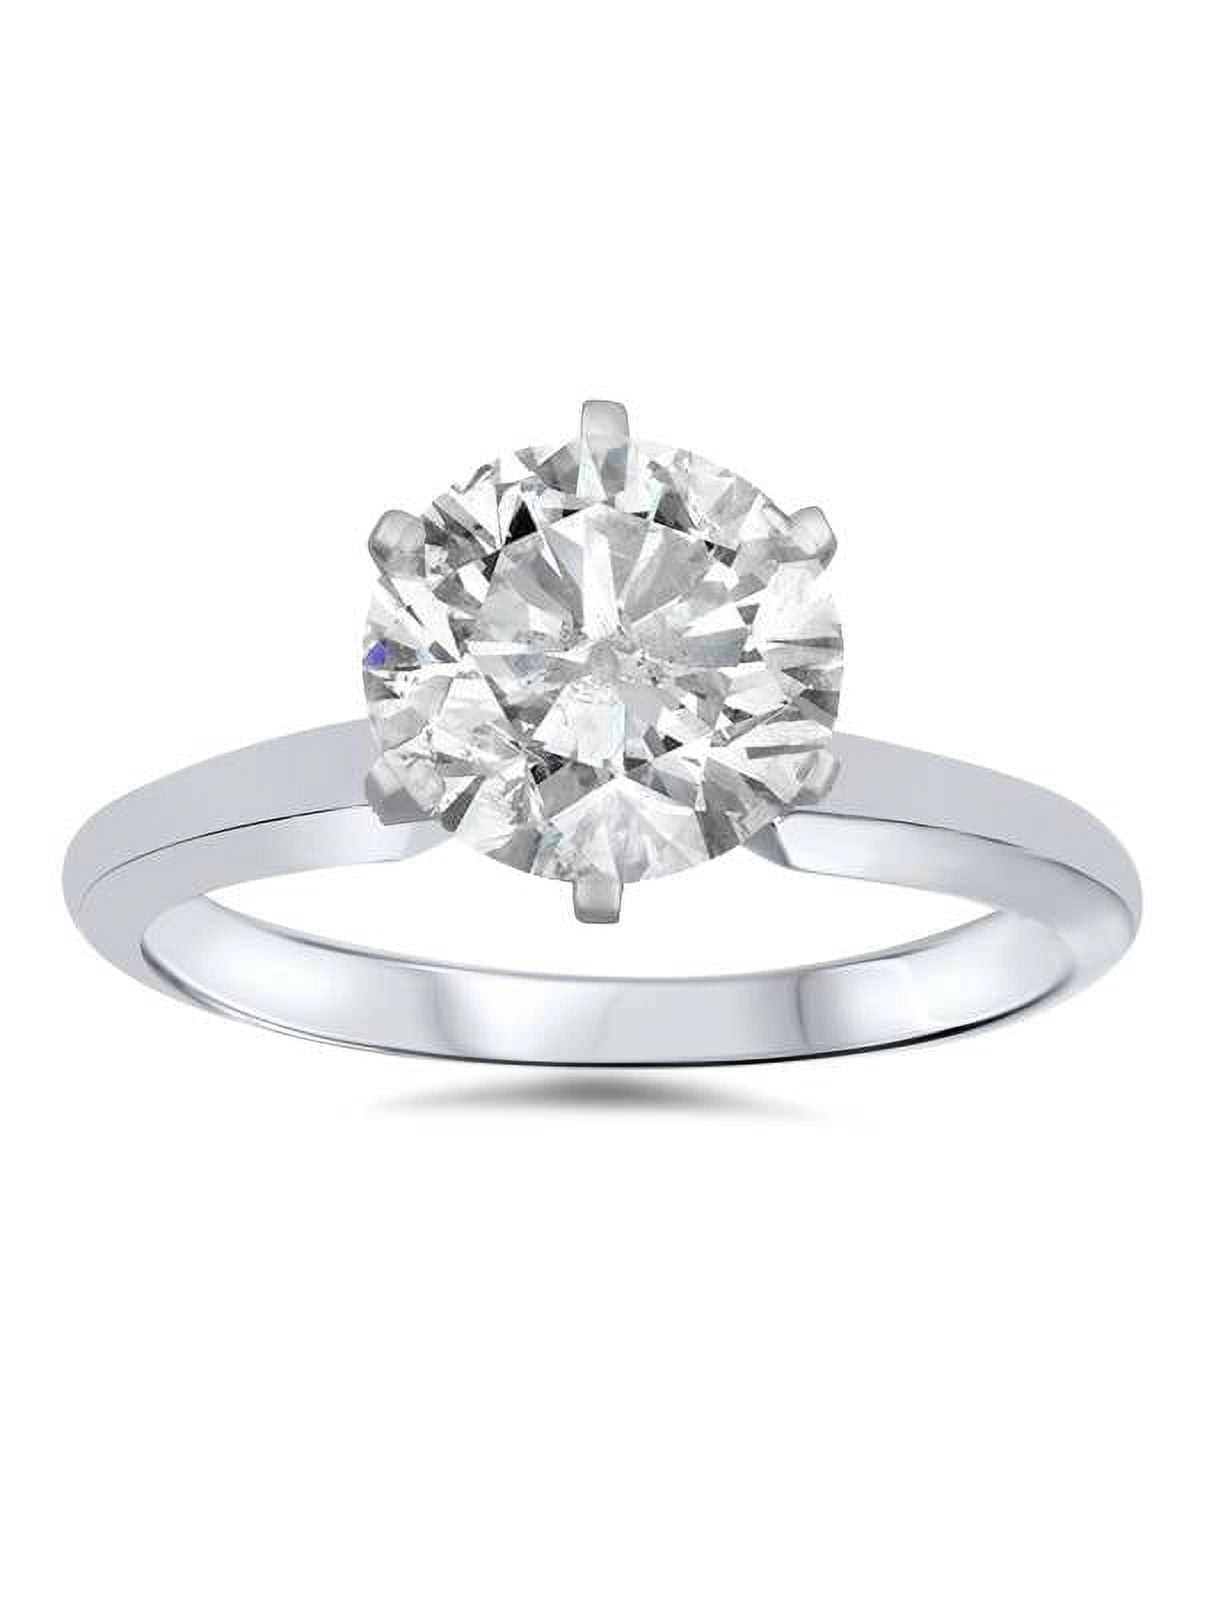 1 ct Round Diamond Solitaire Engagement Ring 14K White Gold - Walmart.com